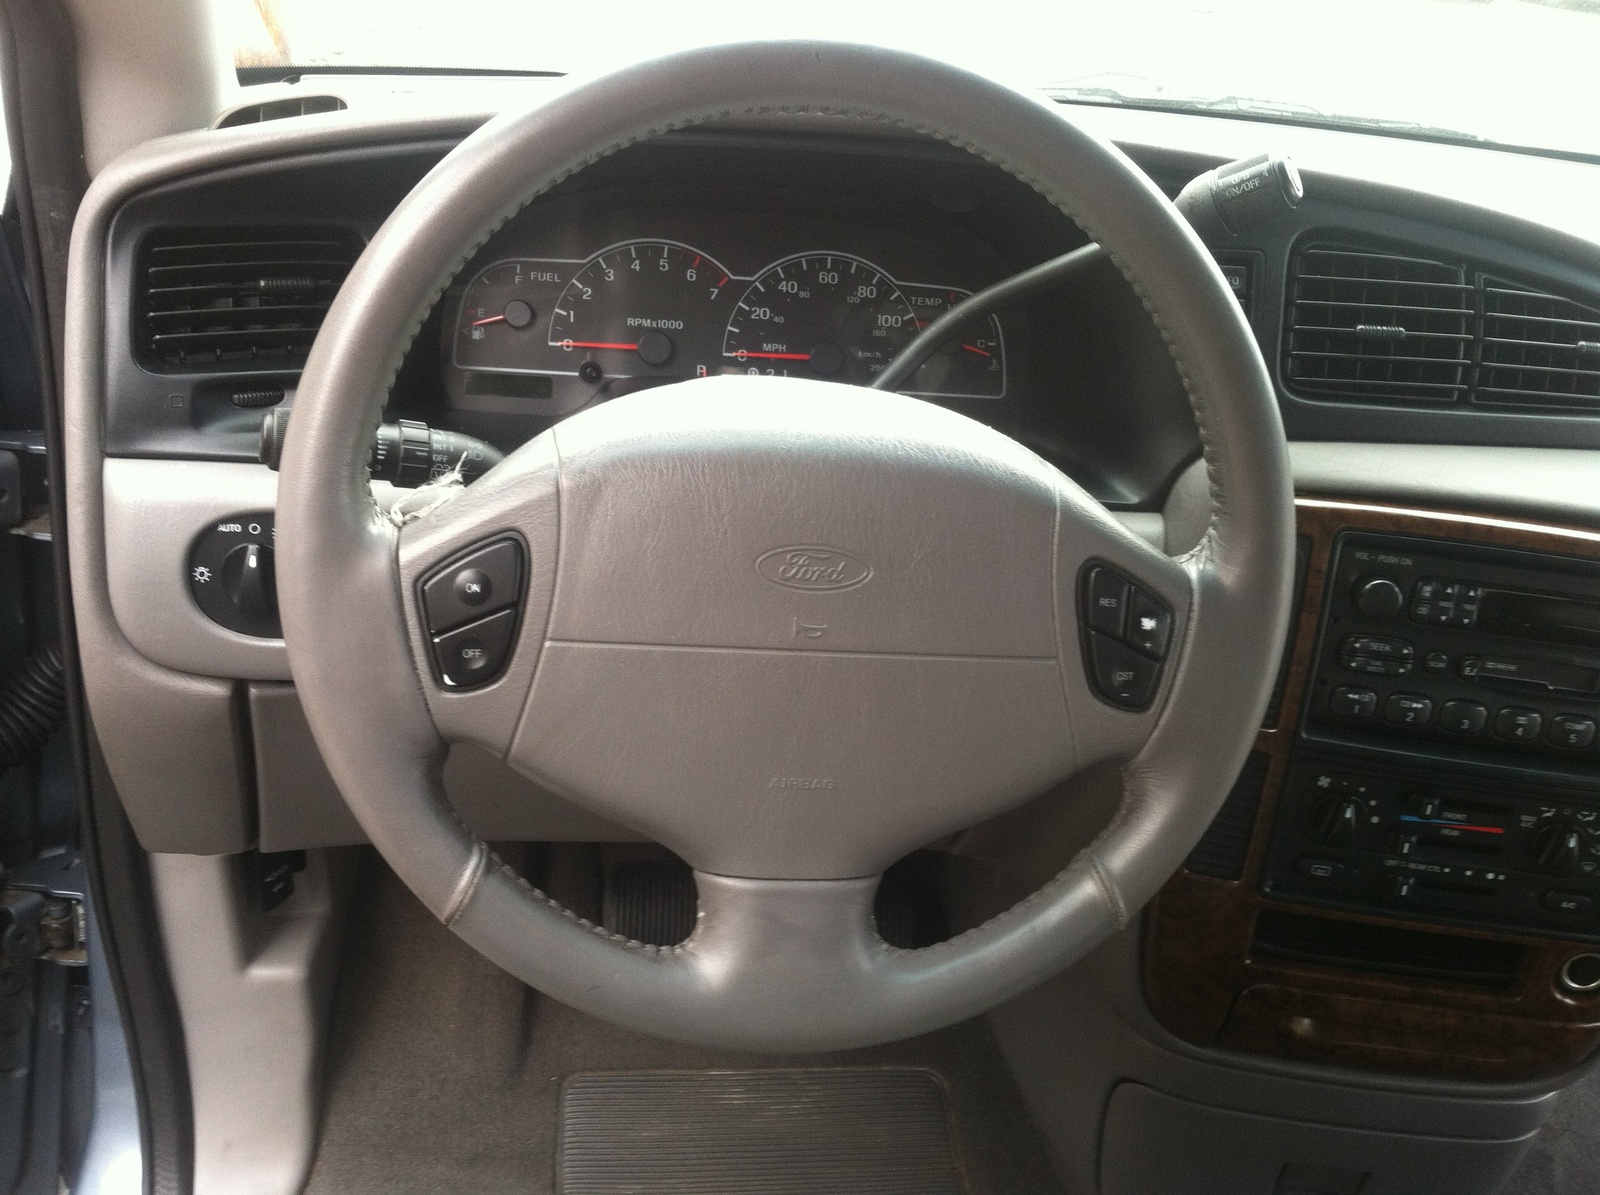 2000 Ford windstar interior dimensions #9